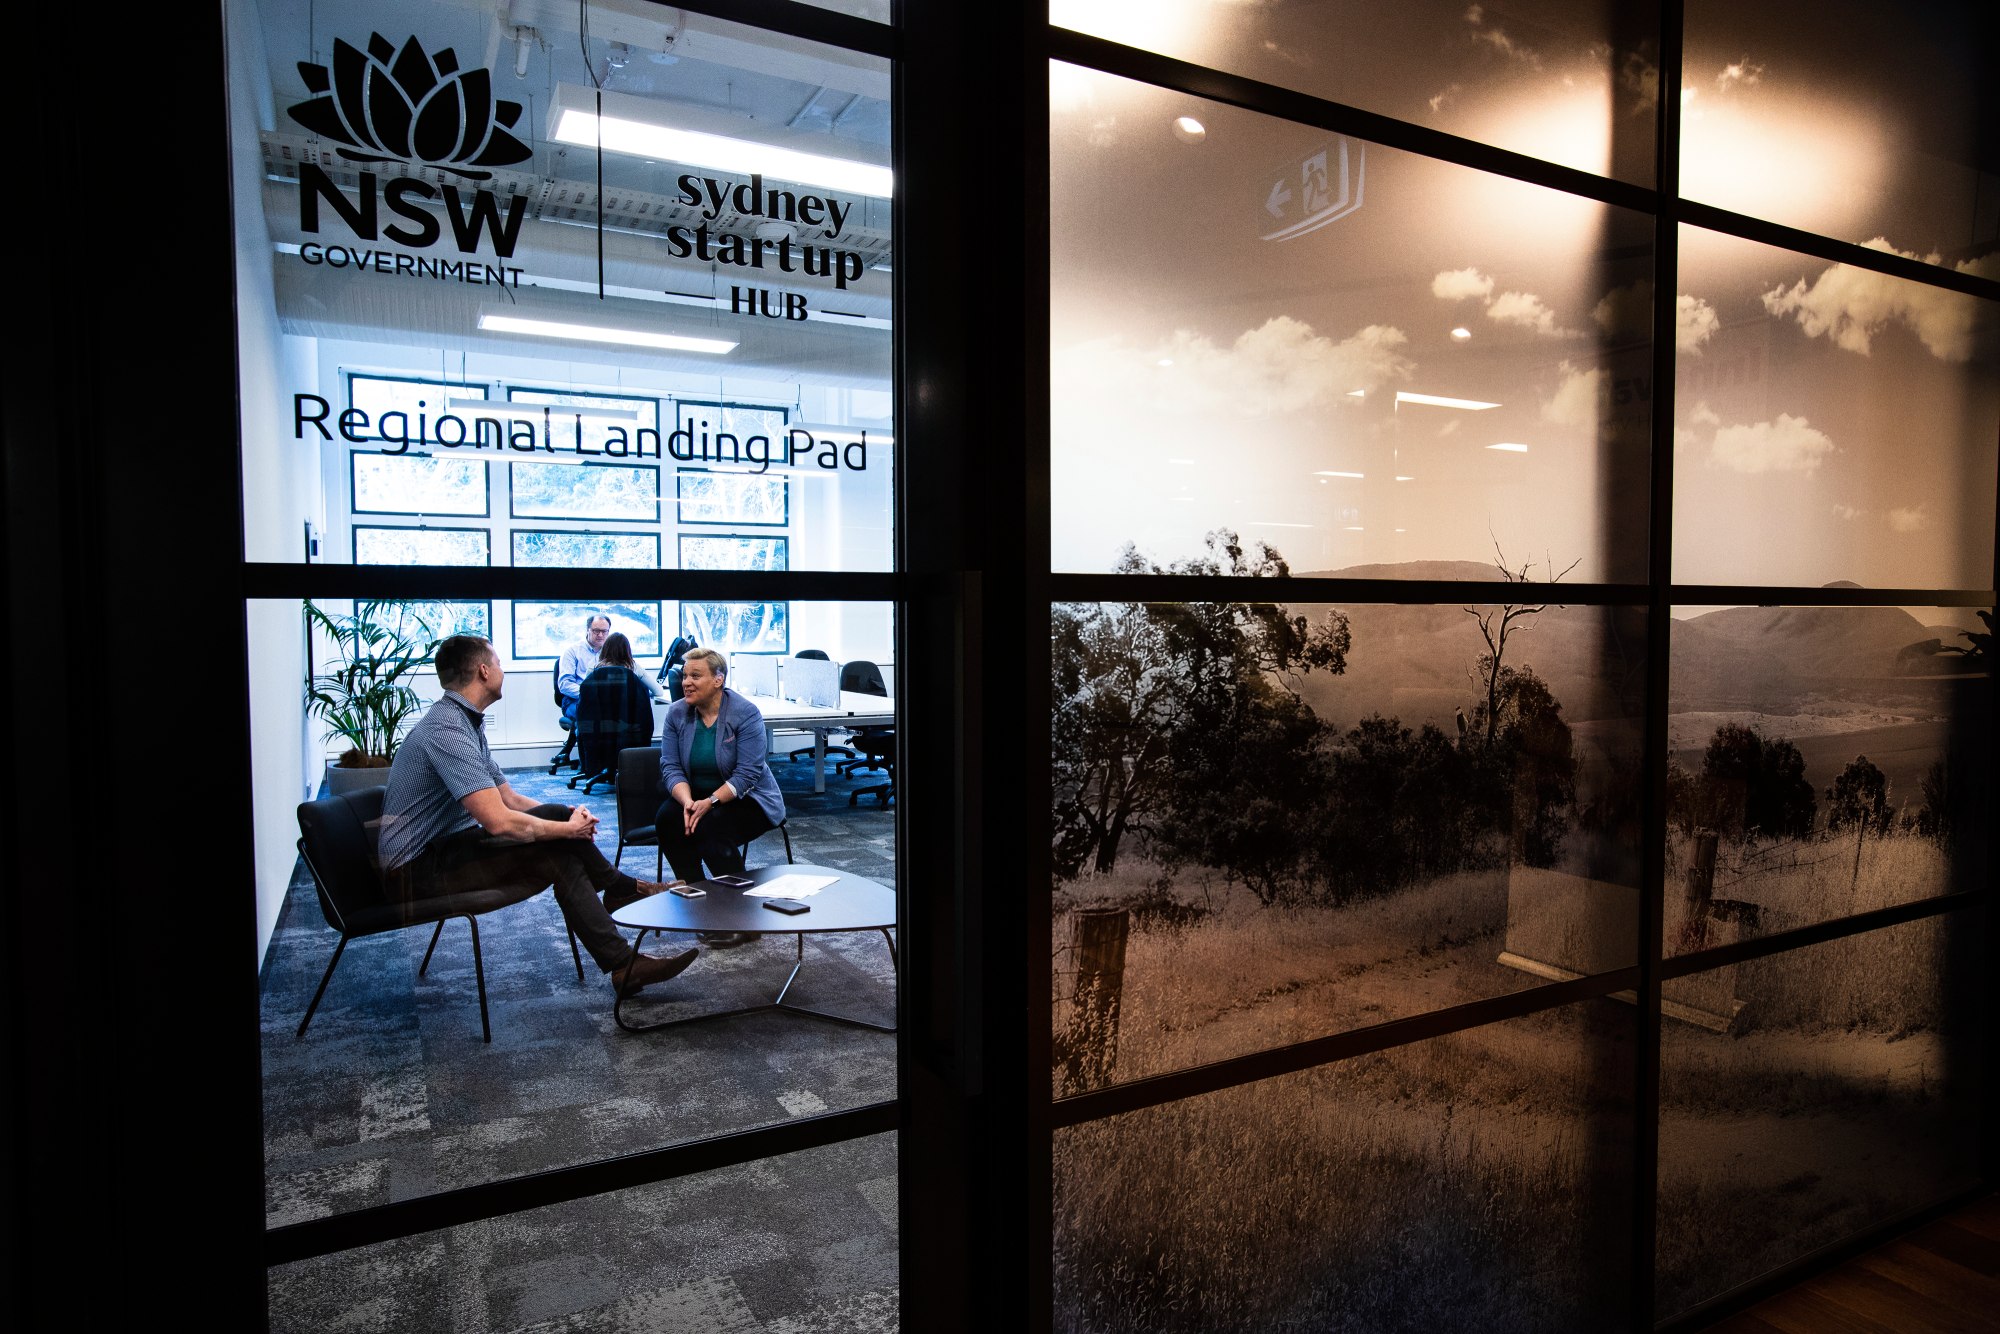 Dedicated and secure Regional Landing Pad at Sydney Startup Hub